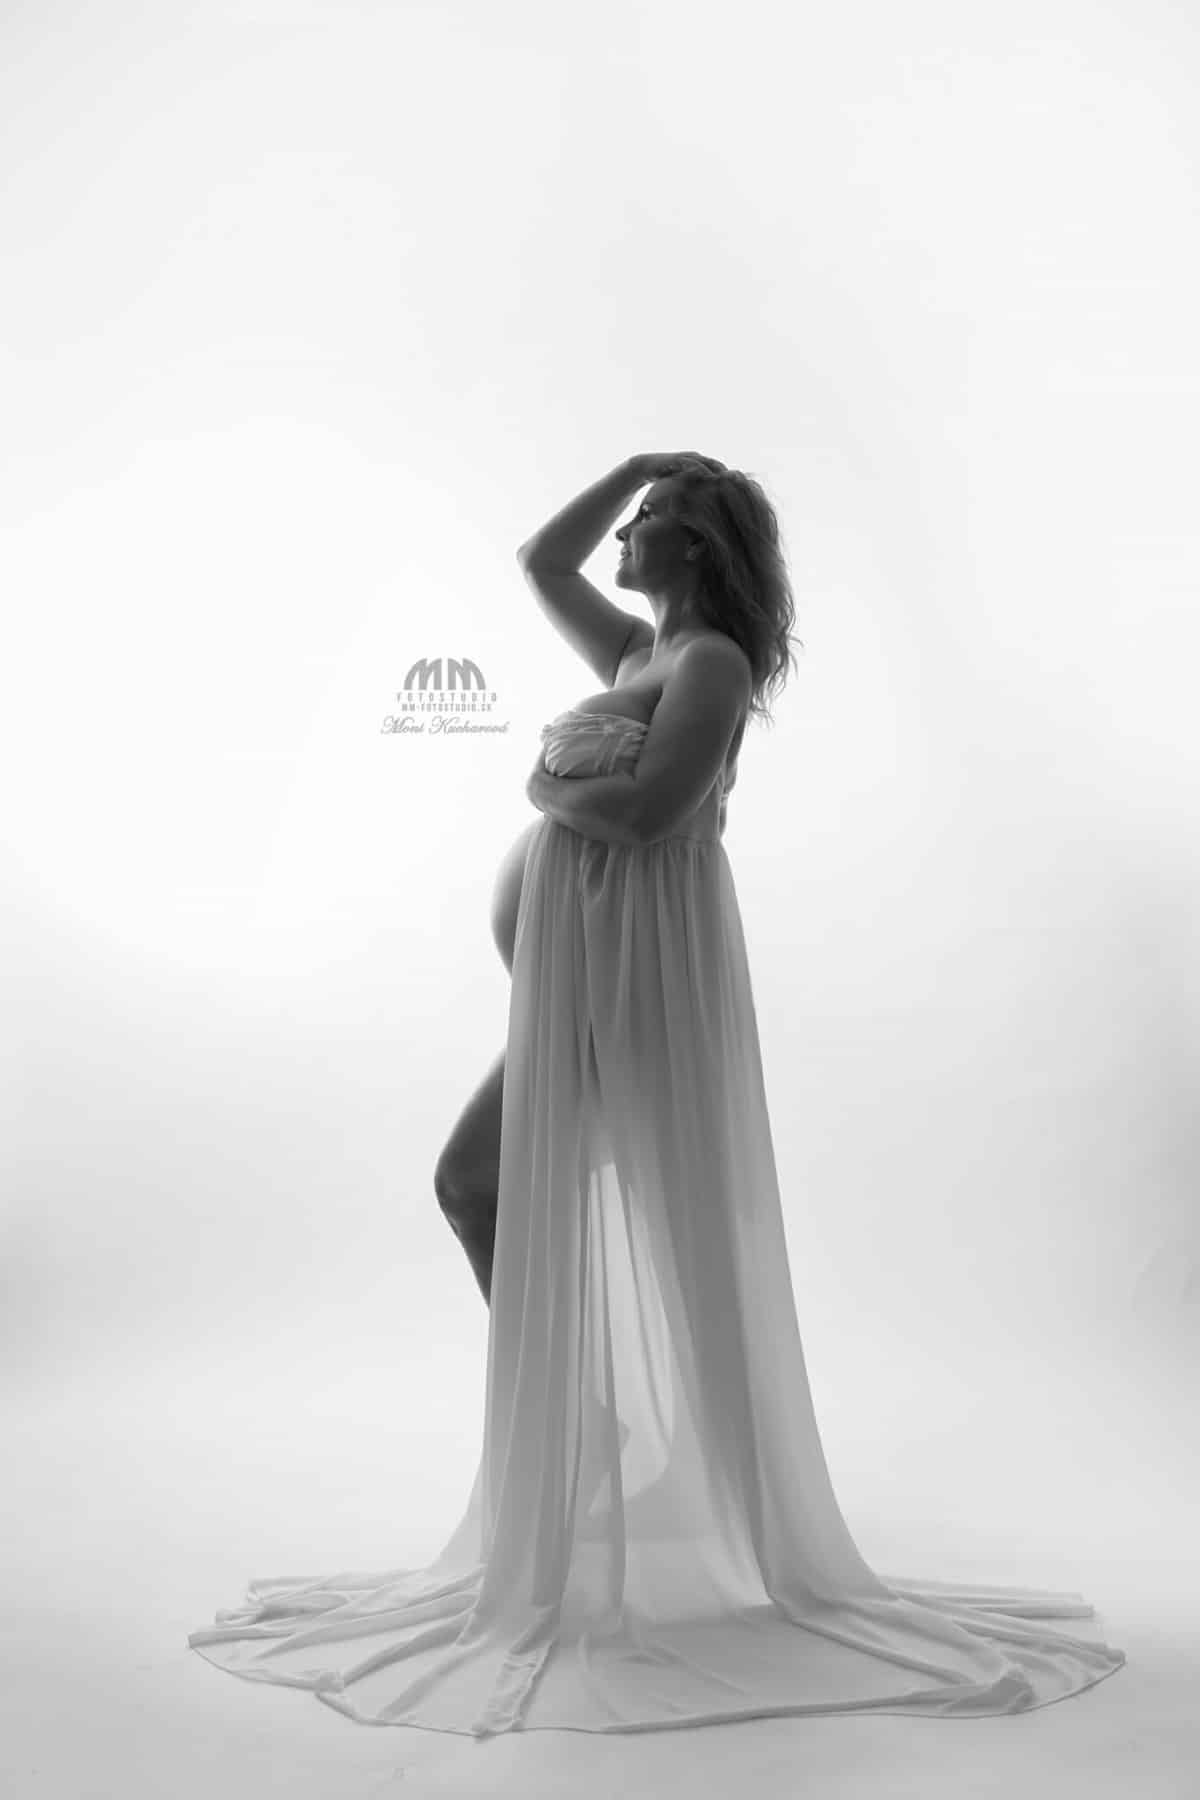 tehotna zena, pregnancy photo, maternity